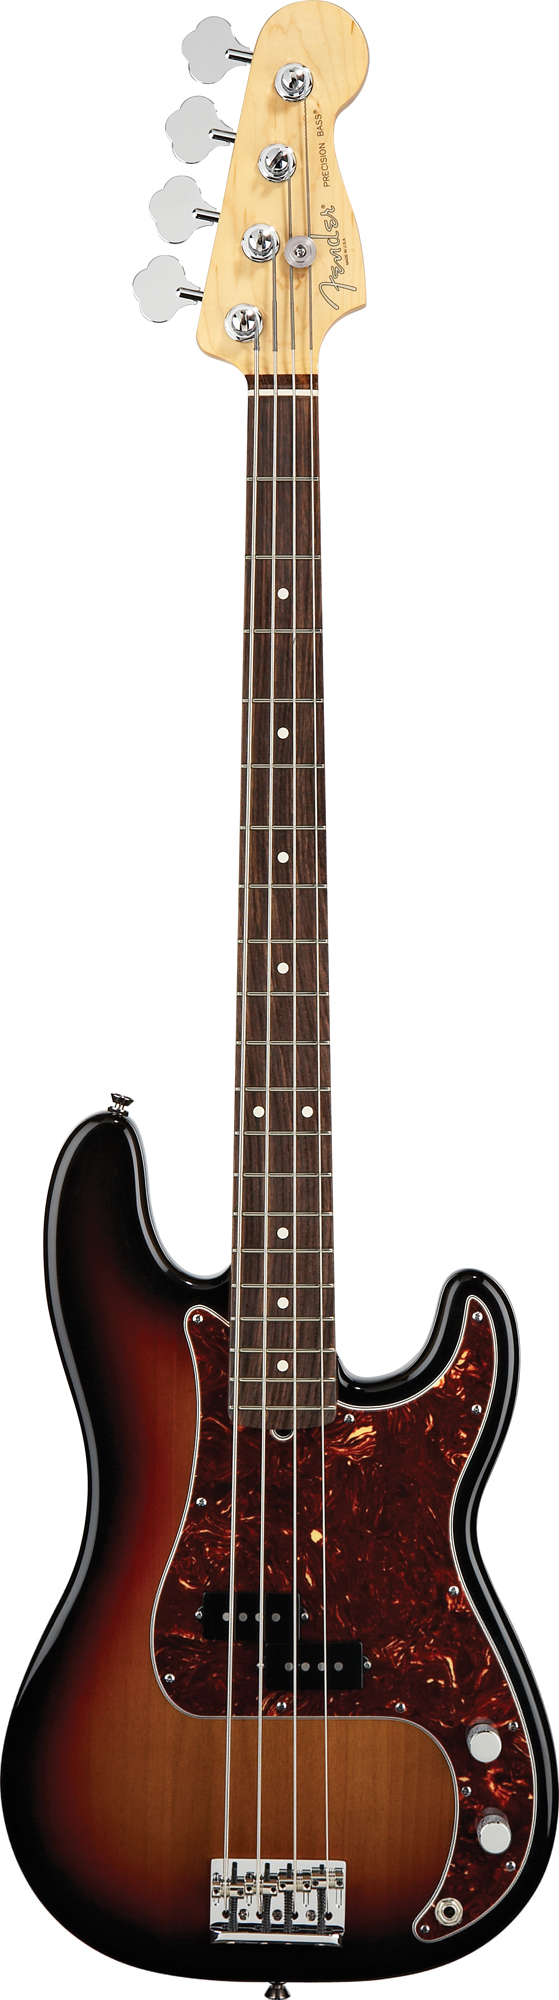 American Standard Precision Bass